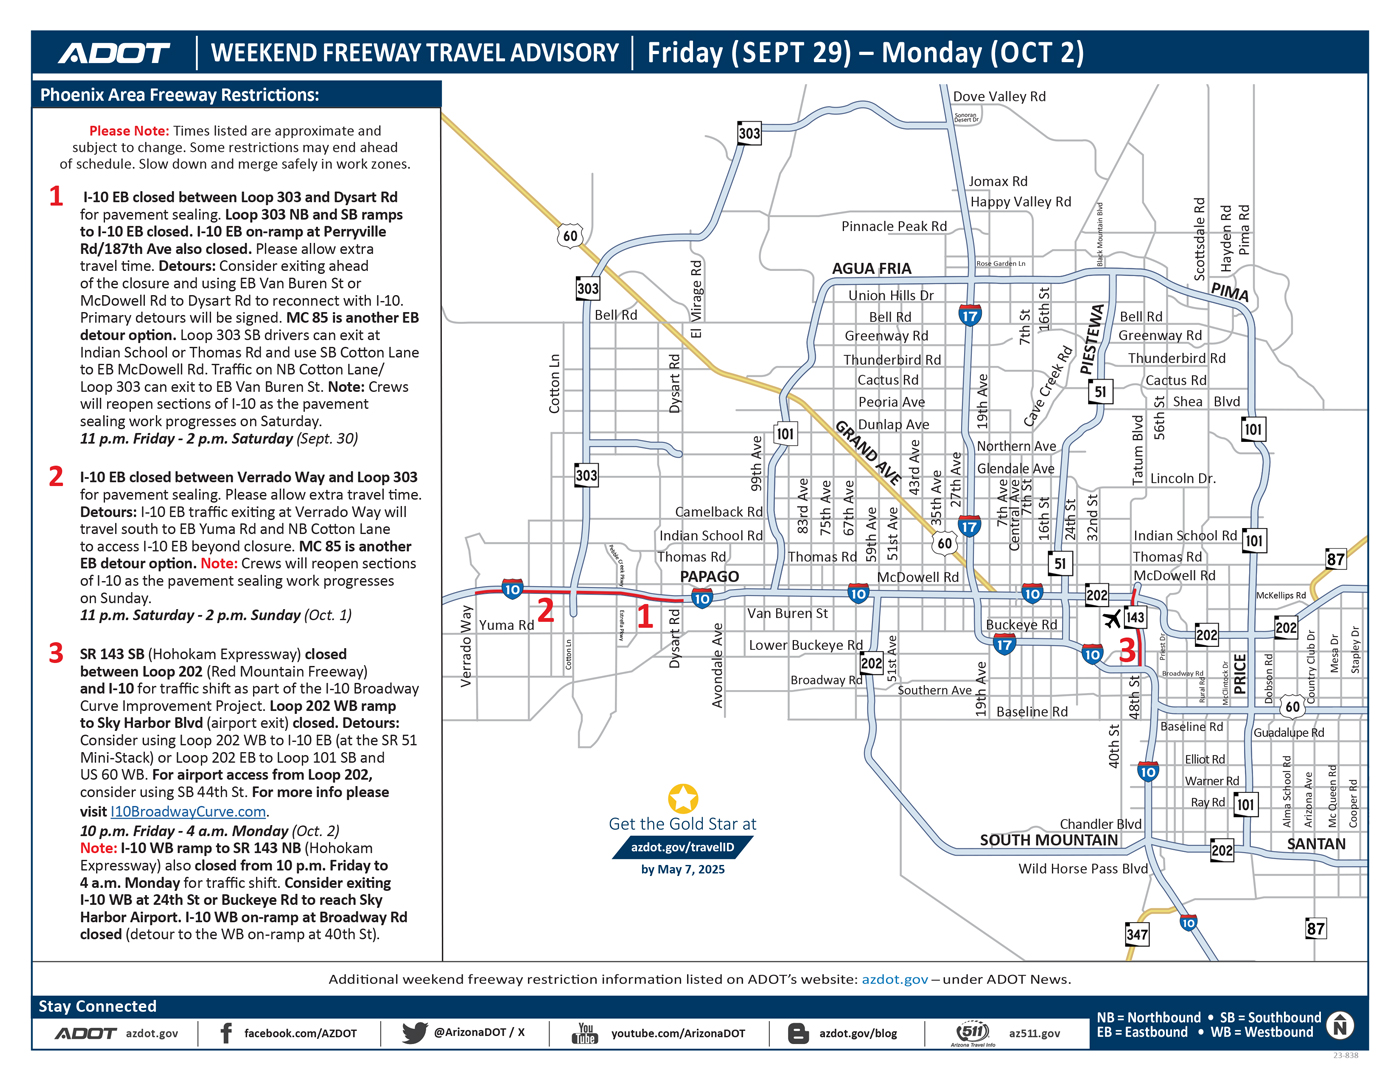 ADOT's Weekend Freeway Travel Advisory Map (Sept. 29-Oct. 2, '23) - Phoenix Area